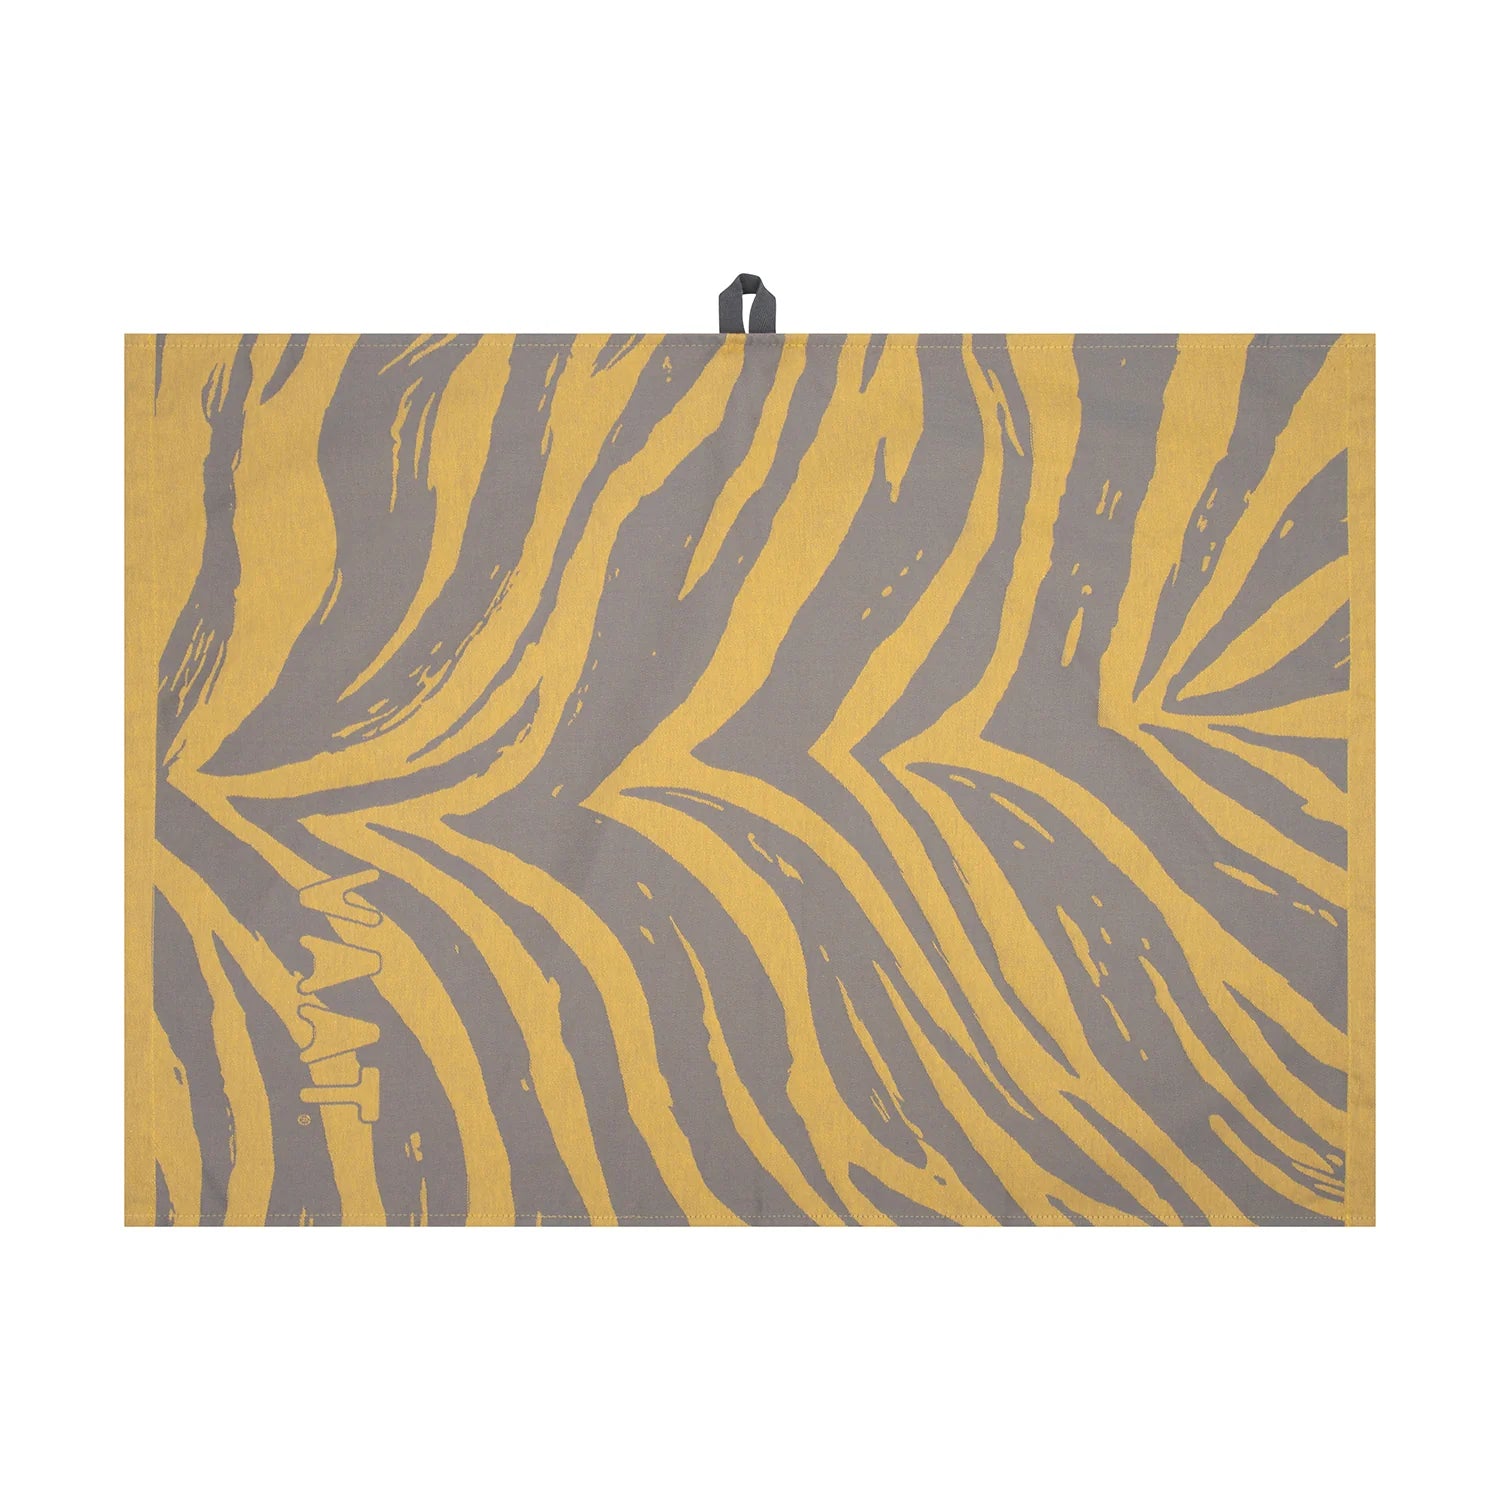 VAAT Amsterdam - Giftset hand- en theedoek 'Zebra' (Yellow/Grey)